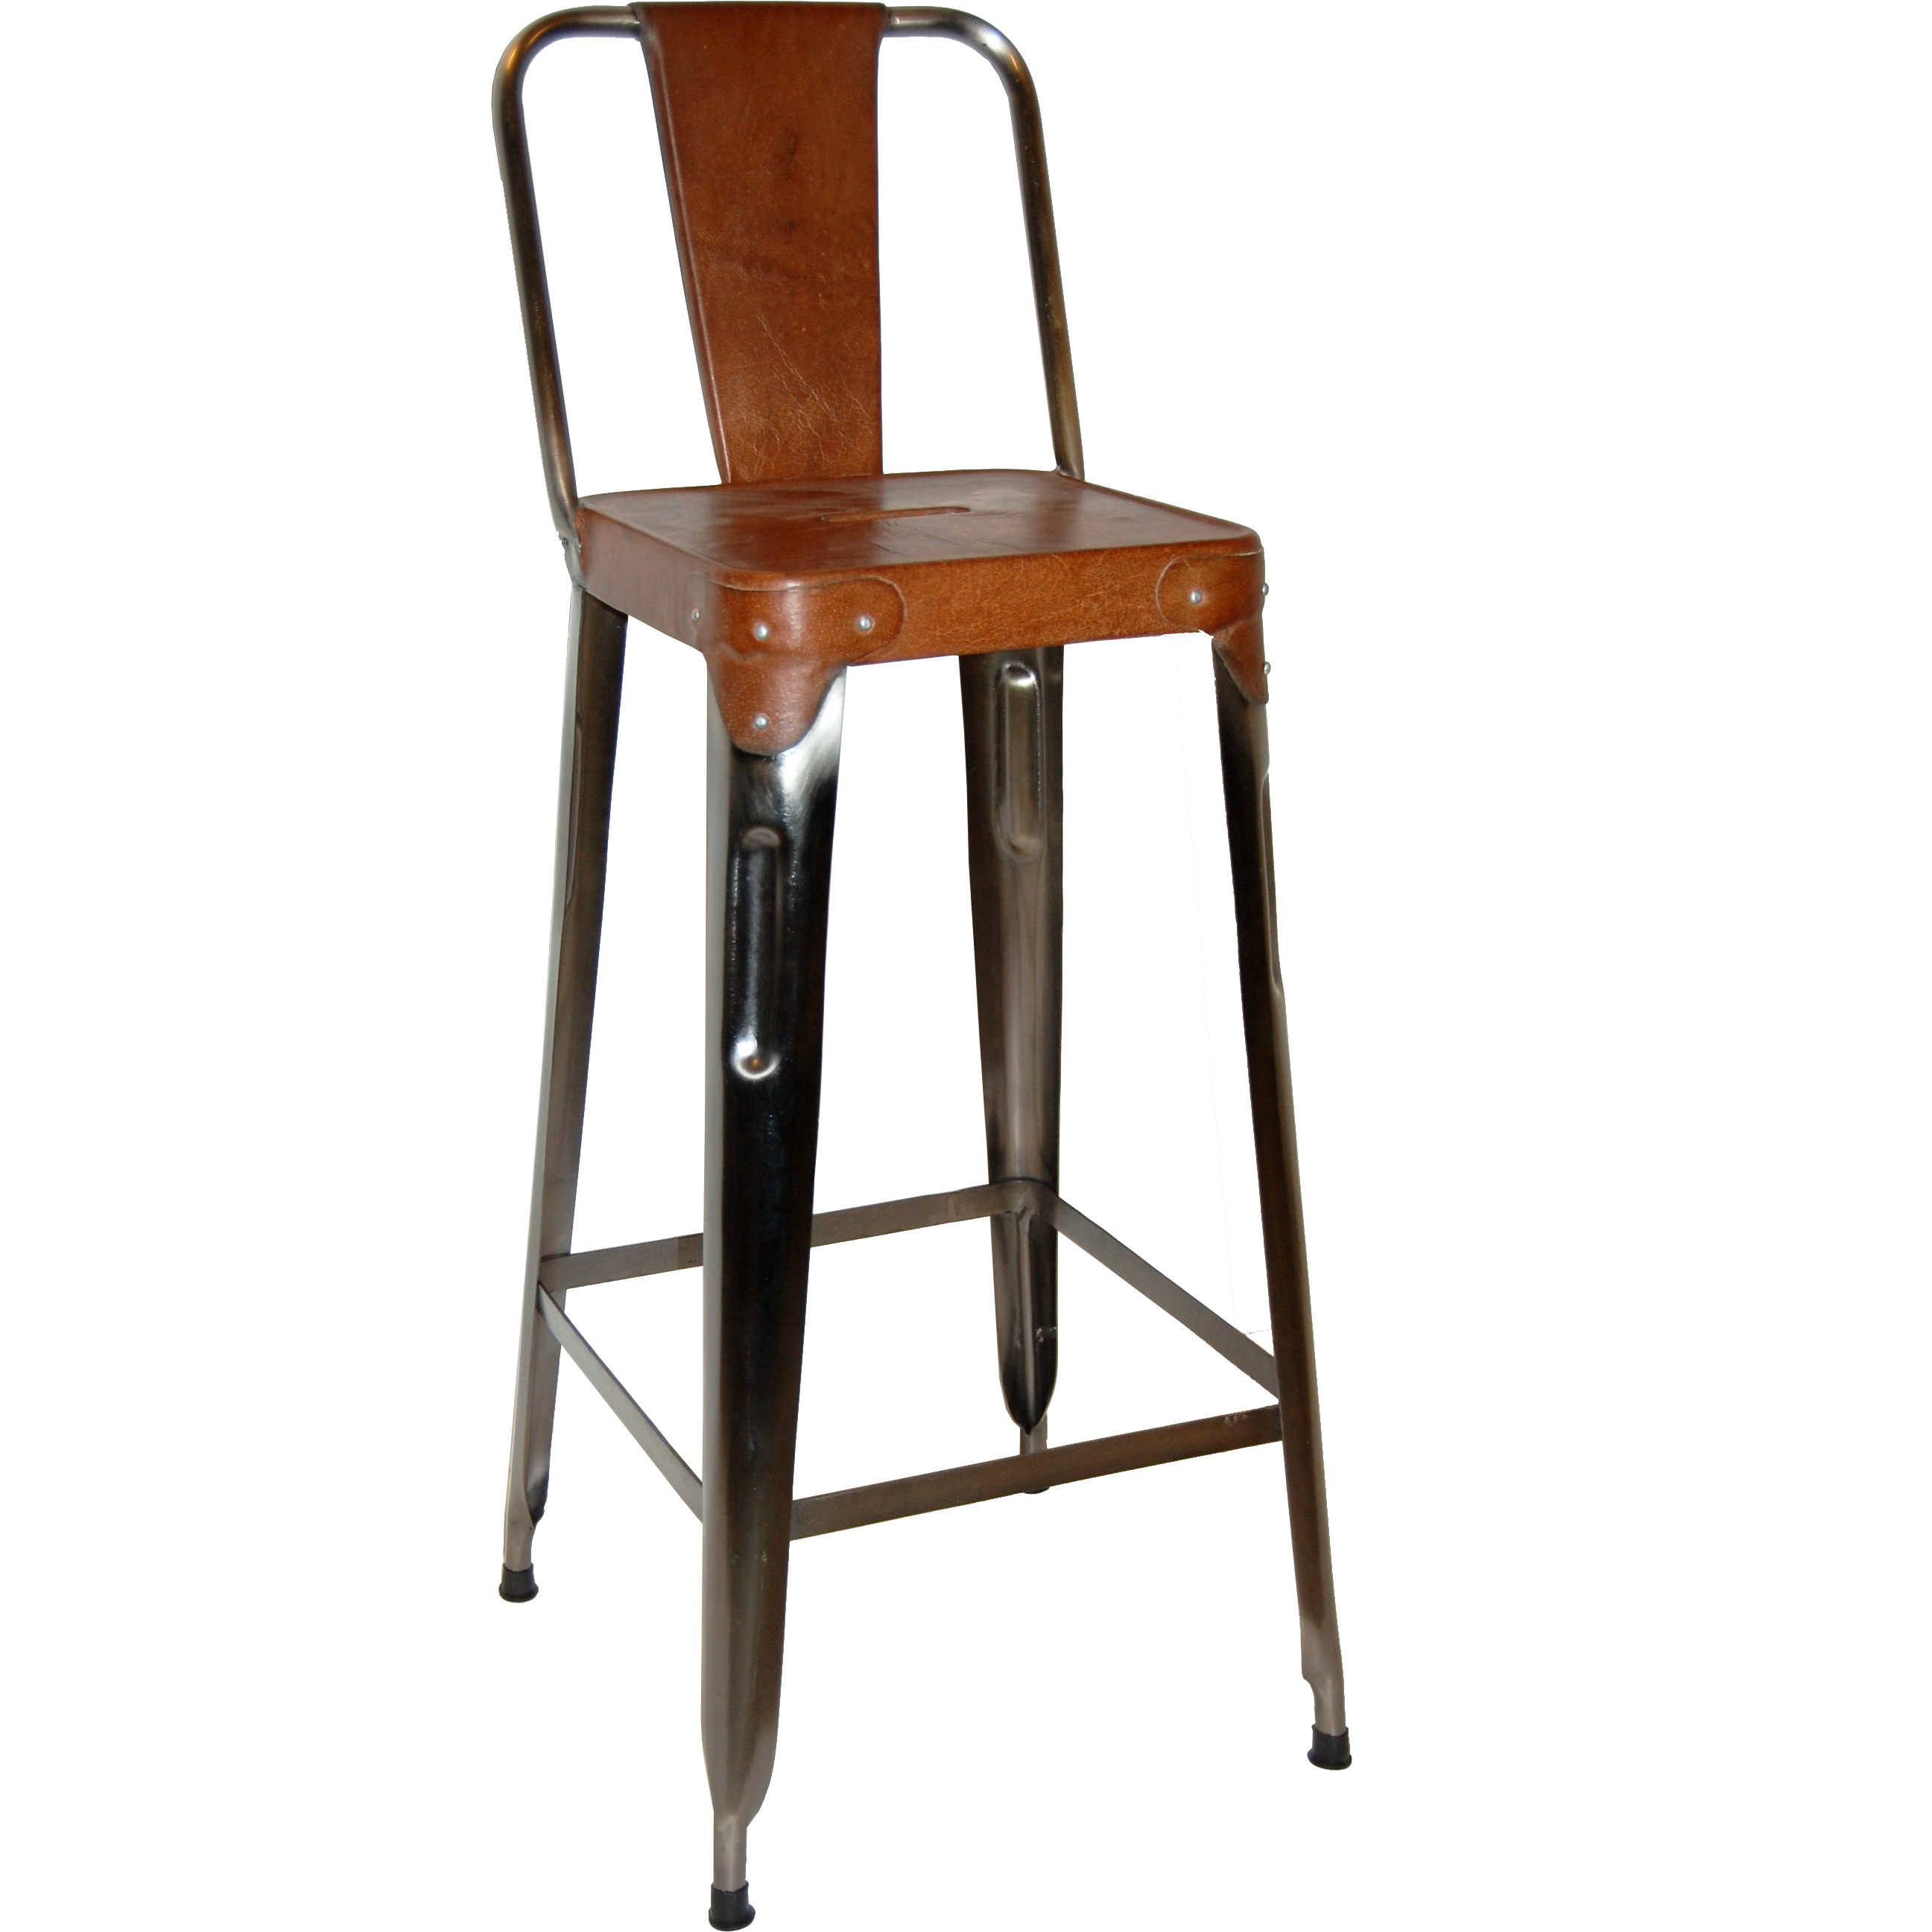 #2 - Trademark Living Barstol m/læder på sæde og ryg - brun 77